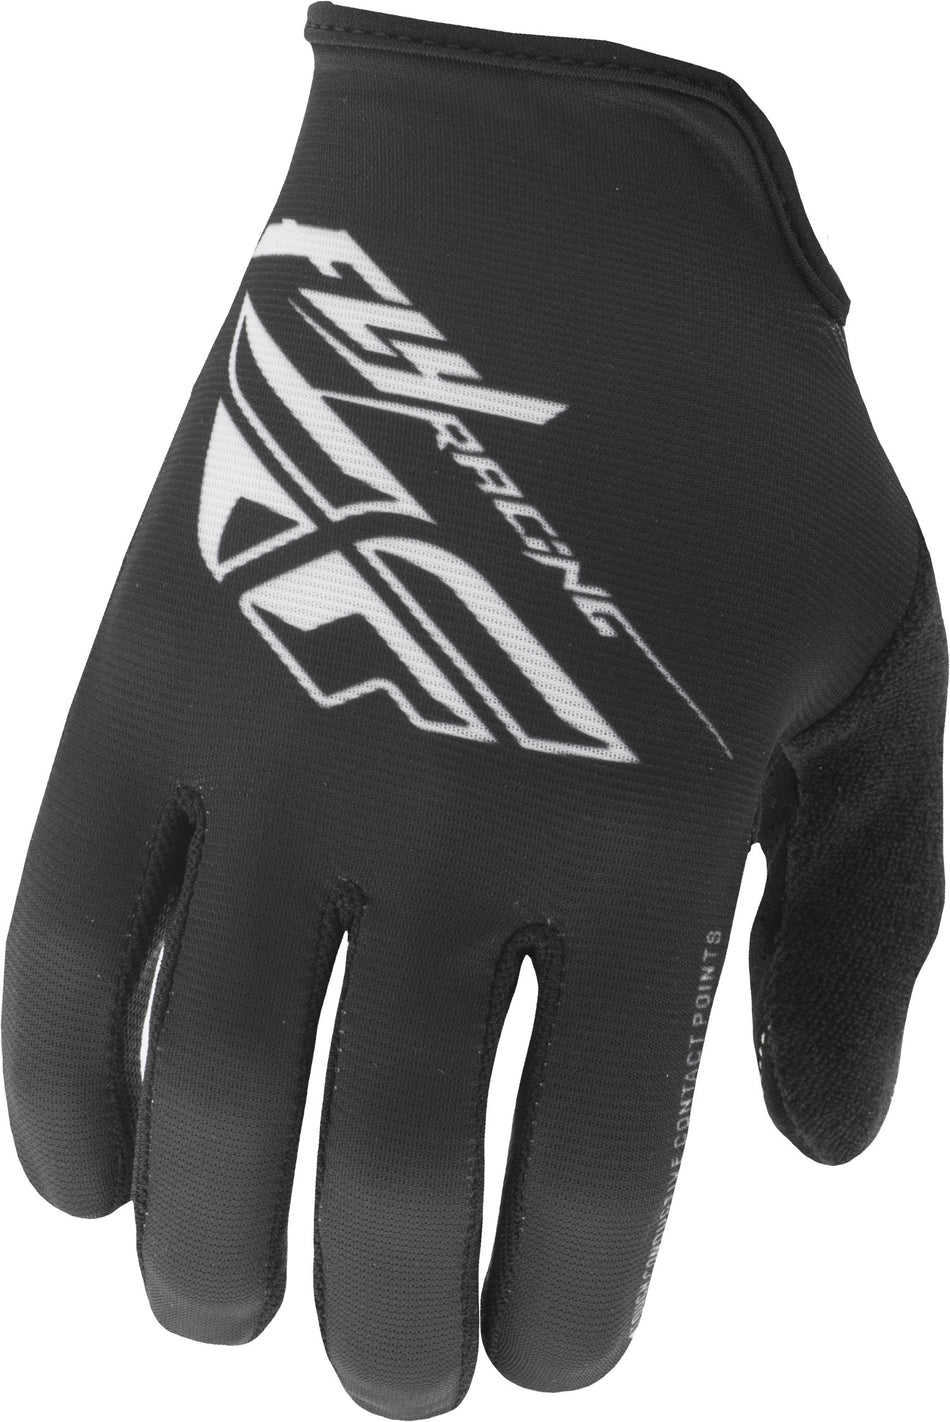 FLY RACING Media Gloves Black Sz 08 350-09008